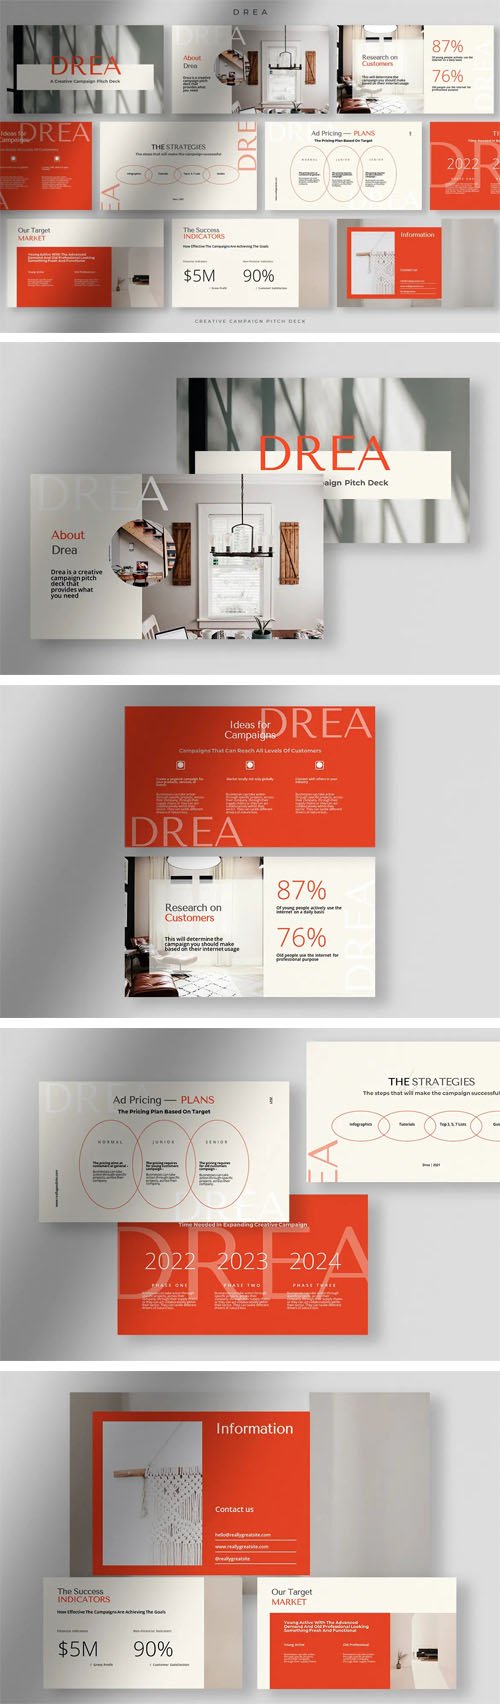 Drea - Creative Campaign Presentation Pitch Deck